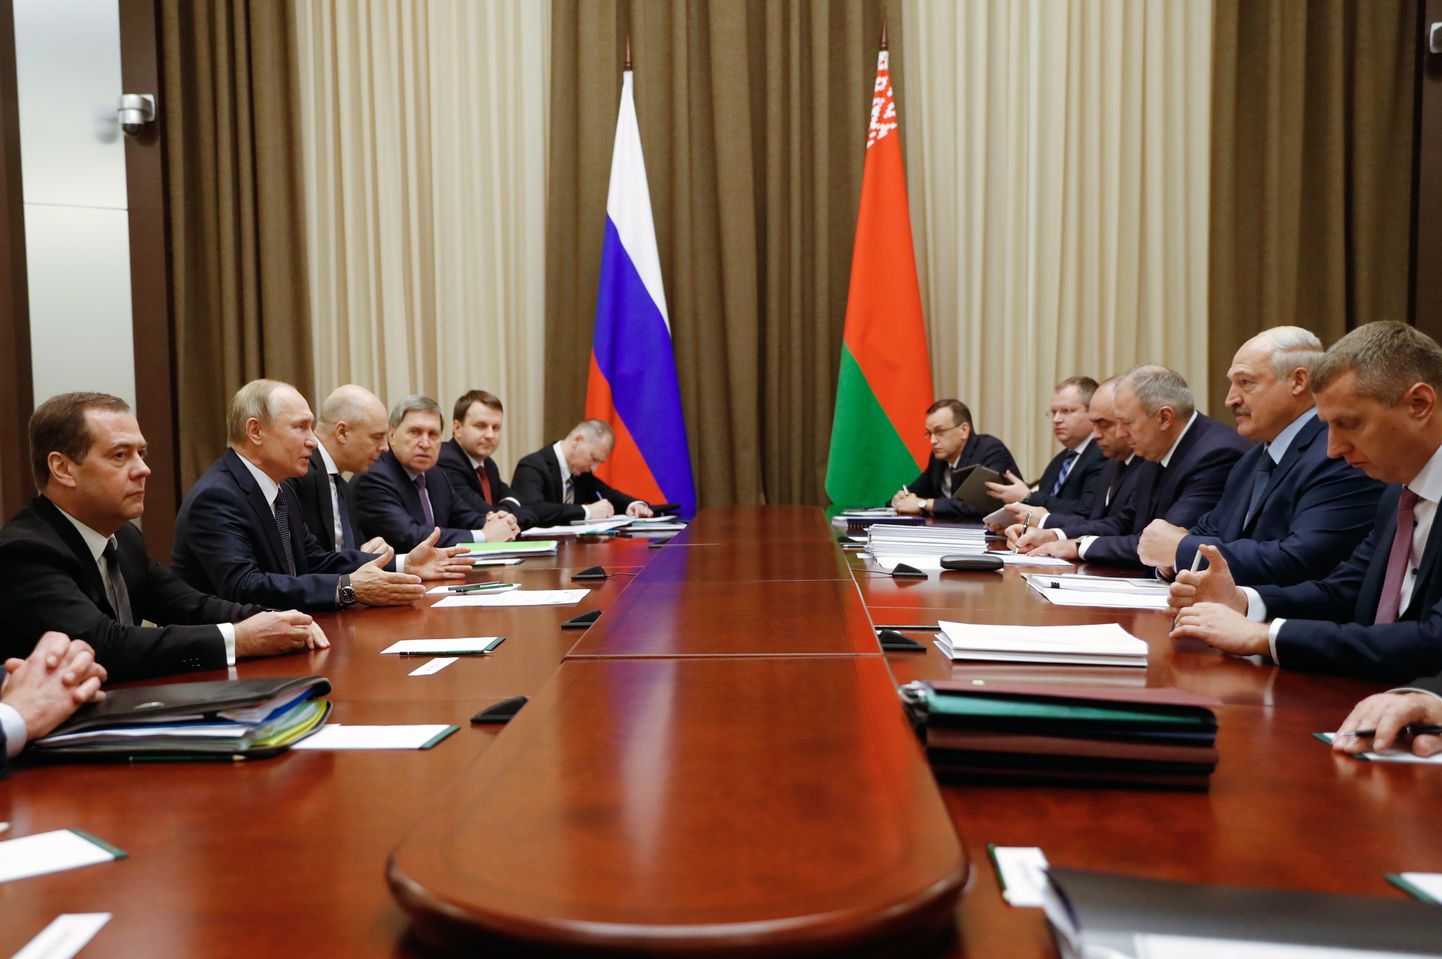 Venemaa president Vladimir Putin ja peaminister Dmitri Medvedev pidamas 7. detsembril Sotšis kõnelusi Valgevene presidendi Aleksandr Lukašenkoga.